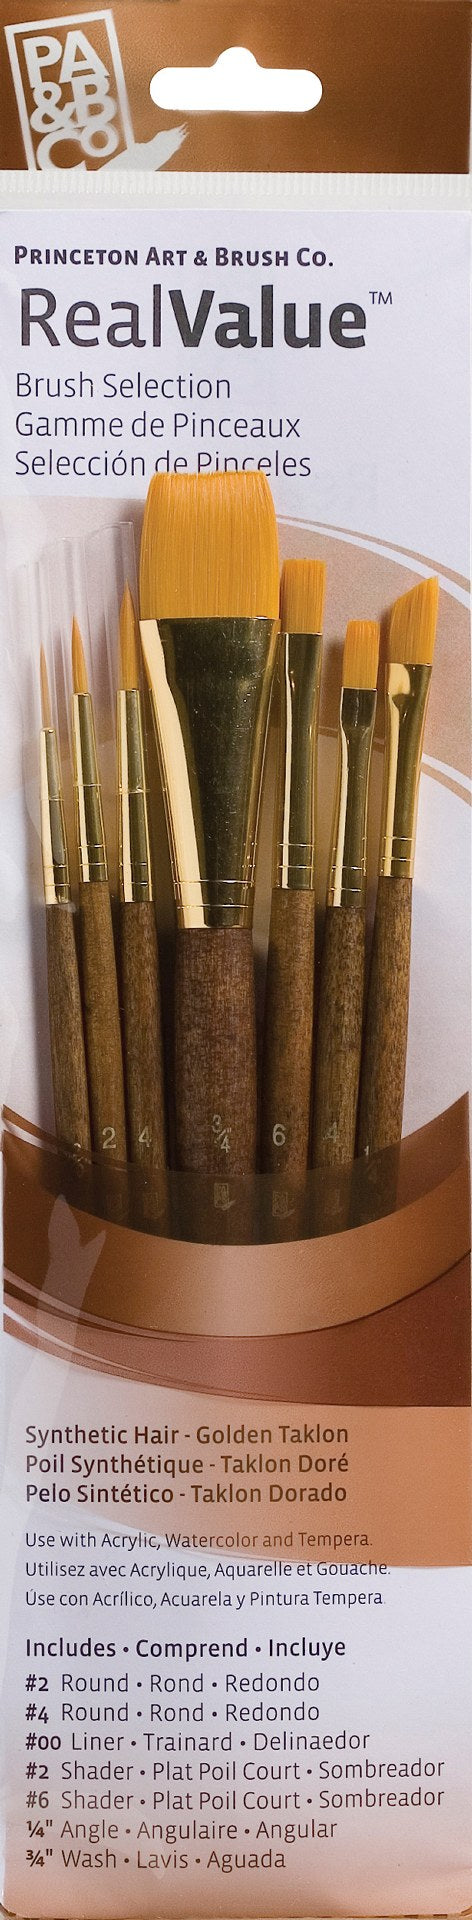 princeton brush real value synthetic-golden taklon set of 7 brushes